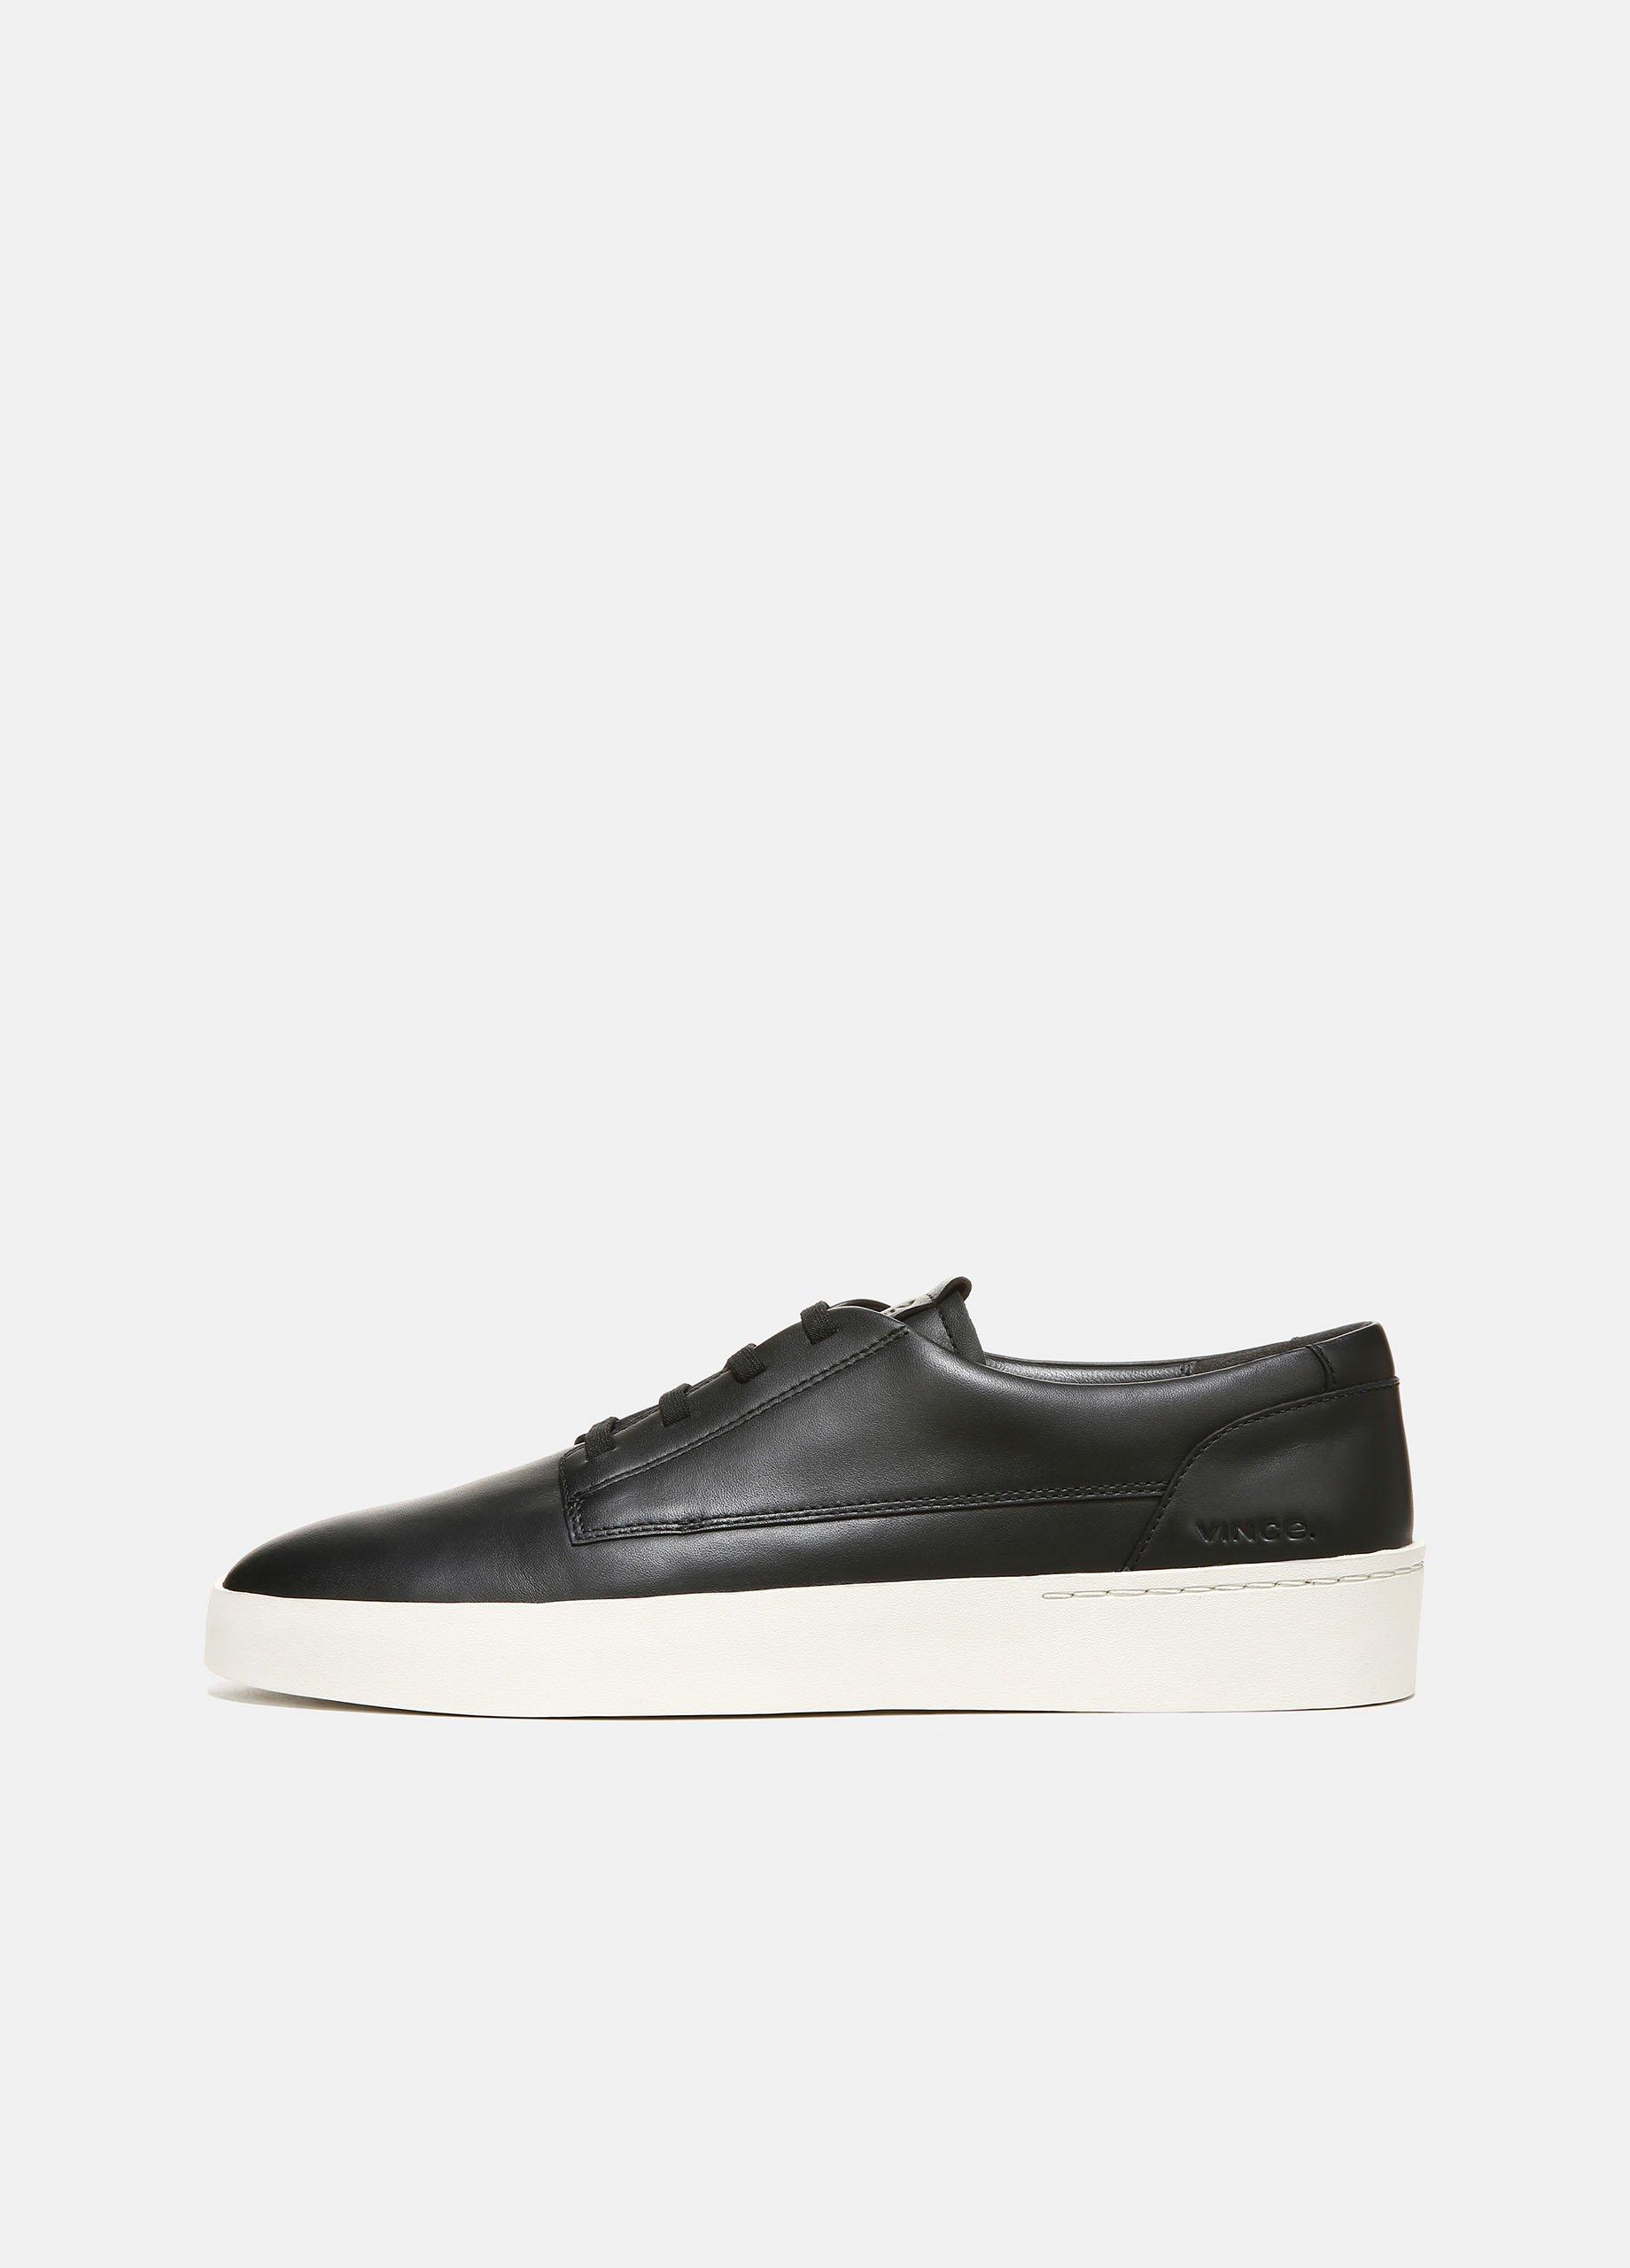 Pine Leather Slip-On Sneaker, Black, Size 8 Vince